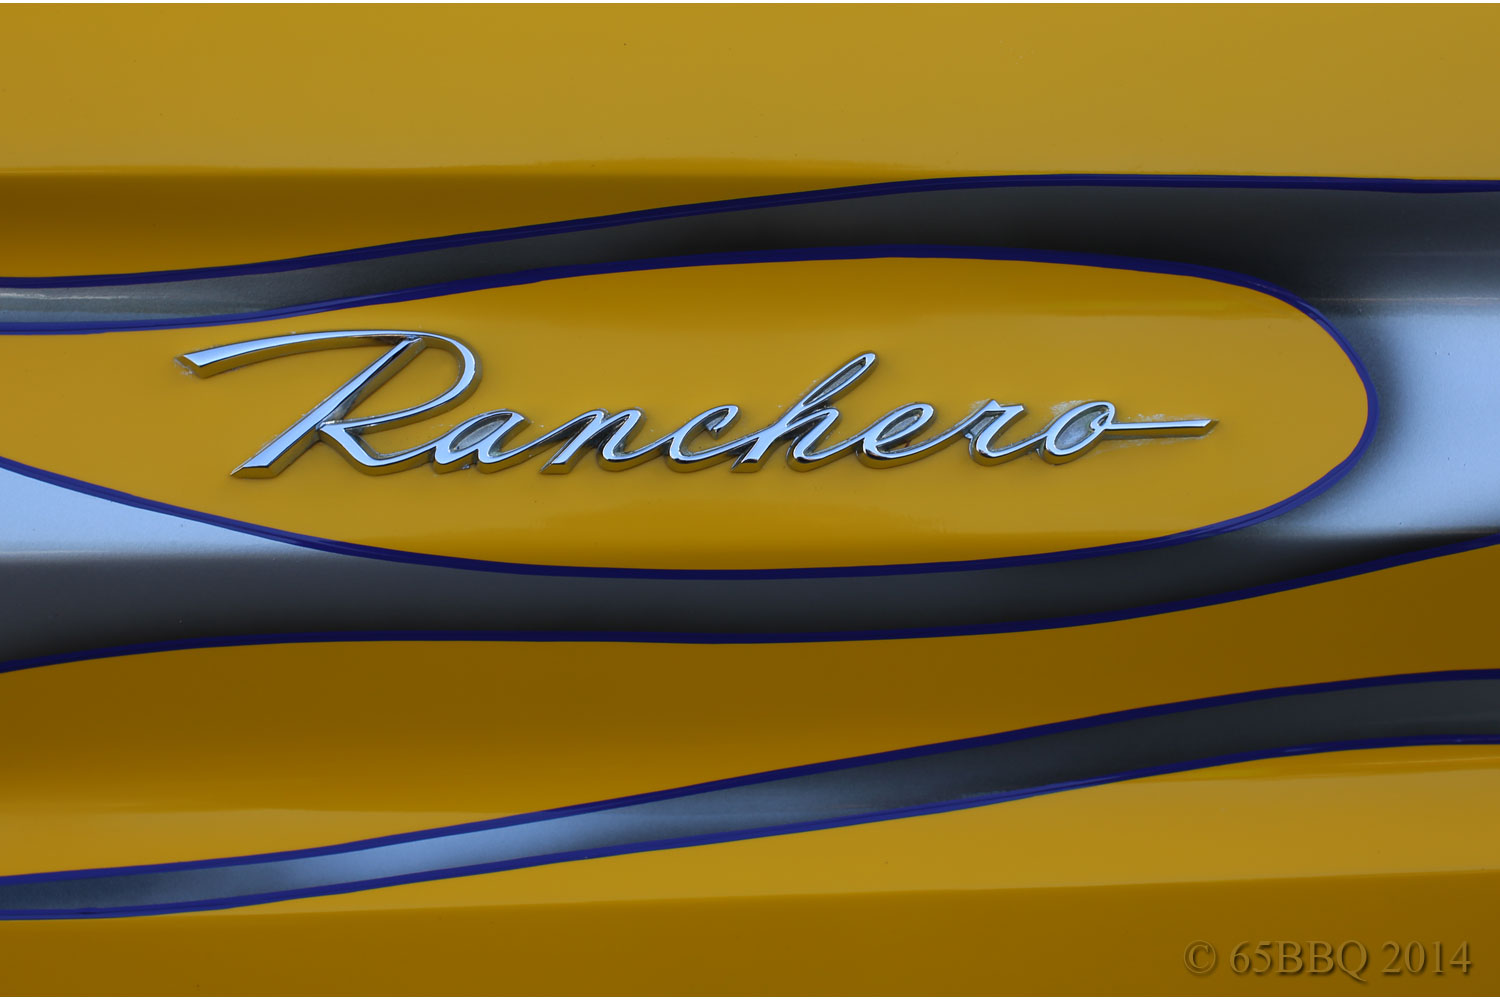 RE-La-Verne-14-Emblem-Ranchero.jpg